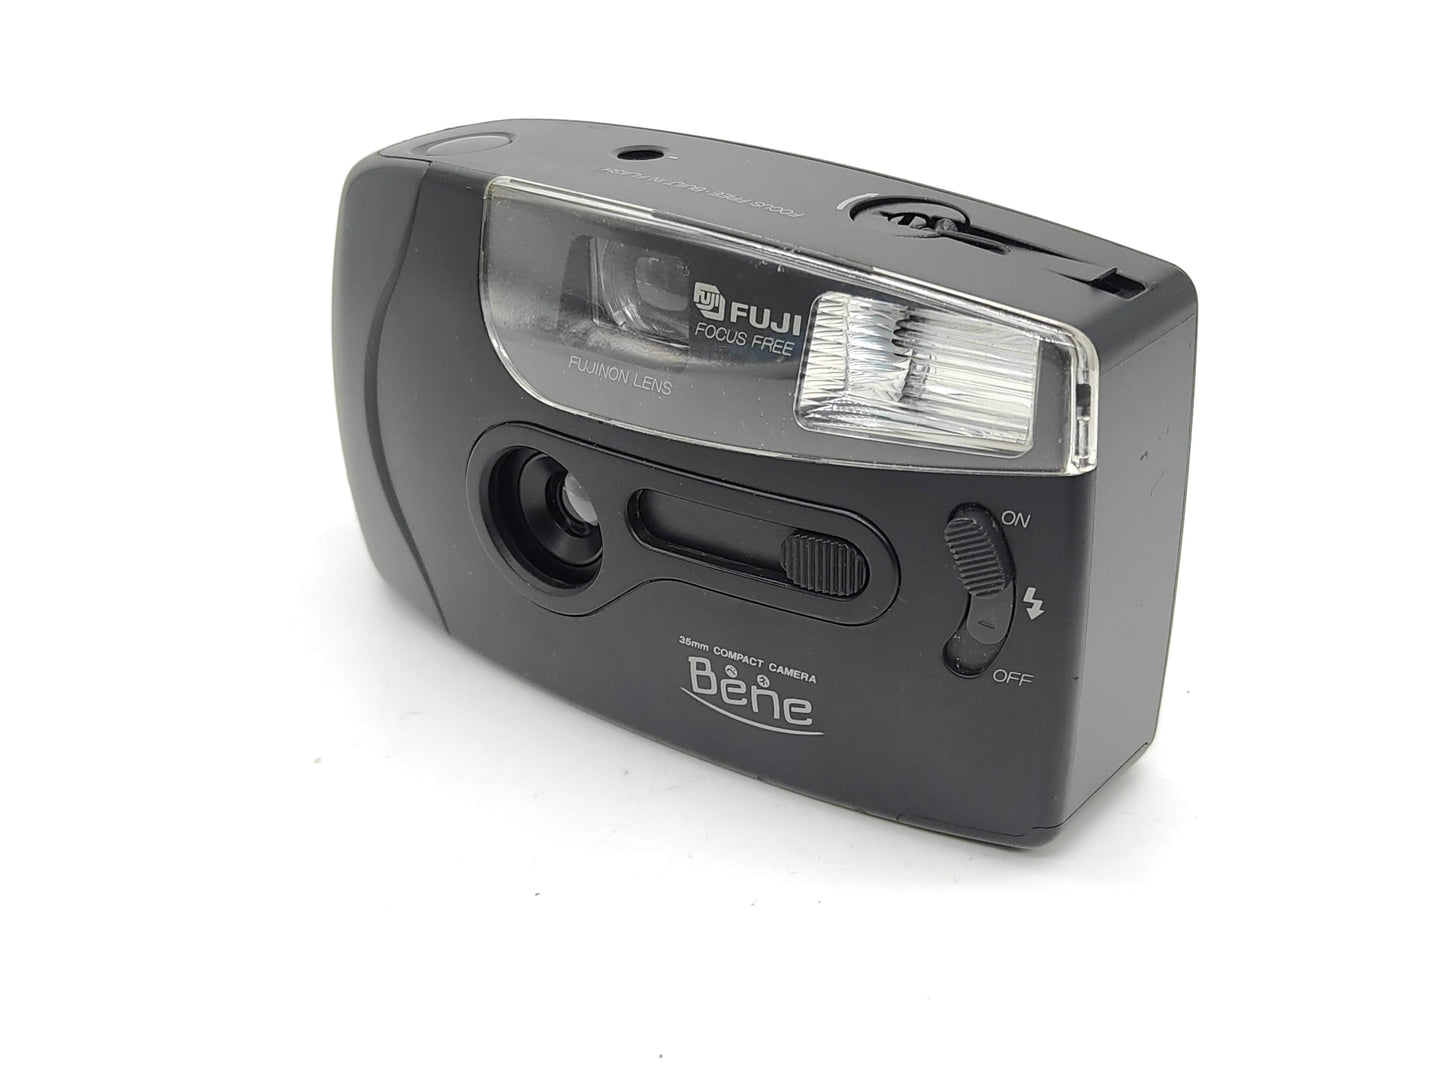 Fuji Bene compact film camera